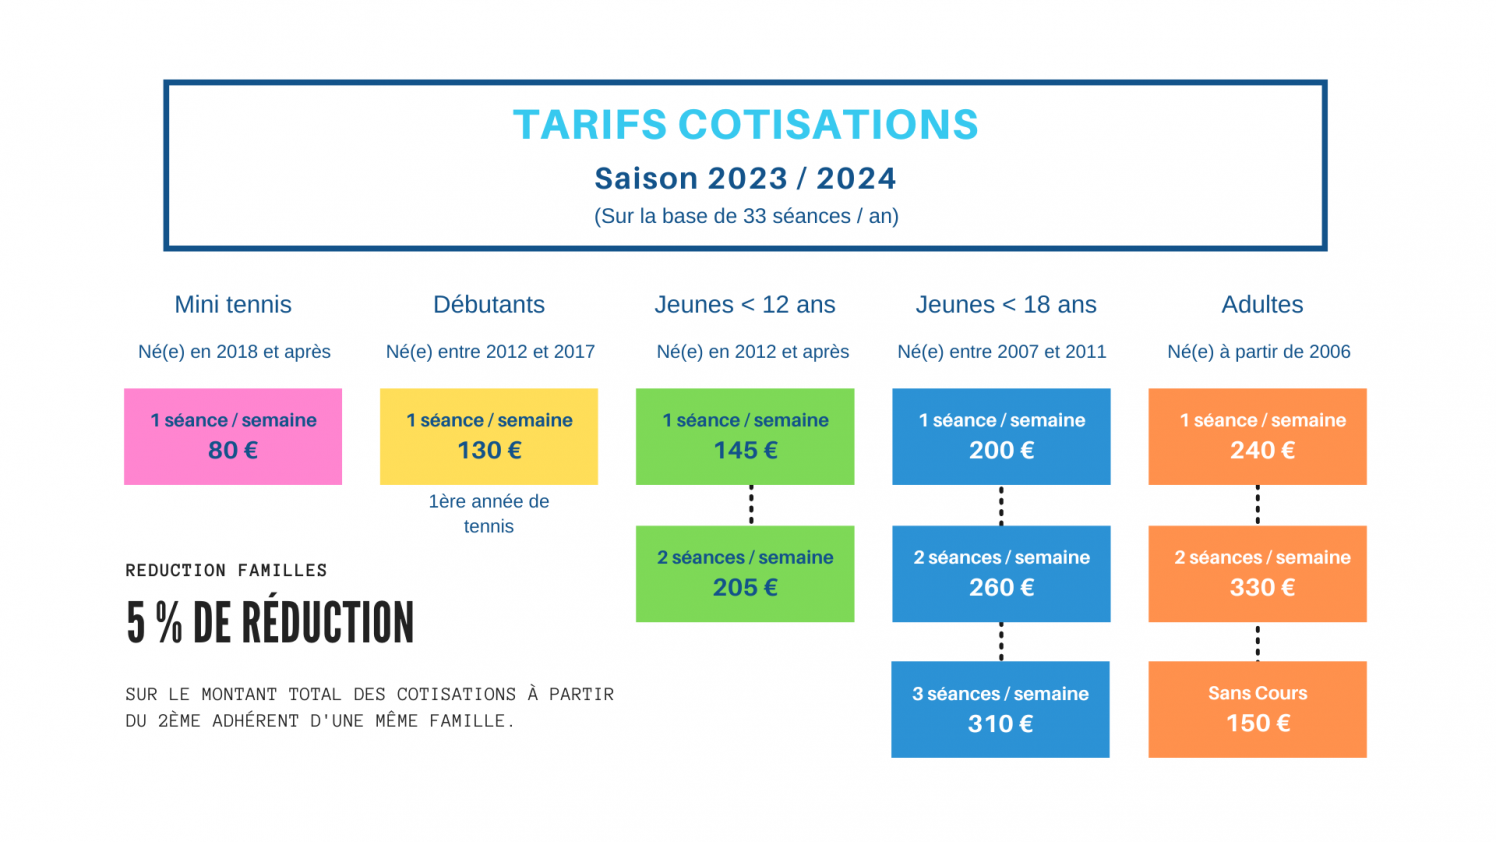 Tarifs cotisations 2023 2024